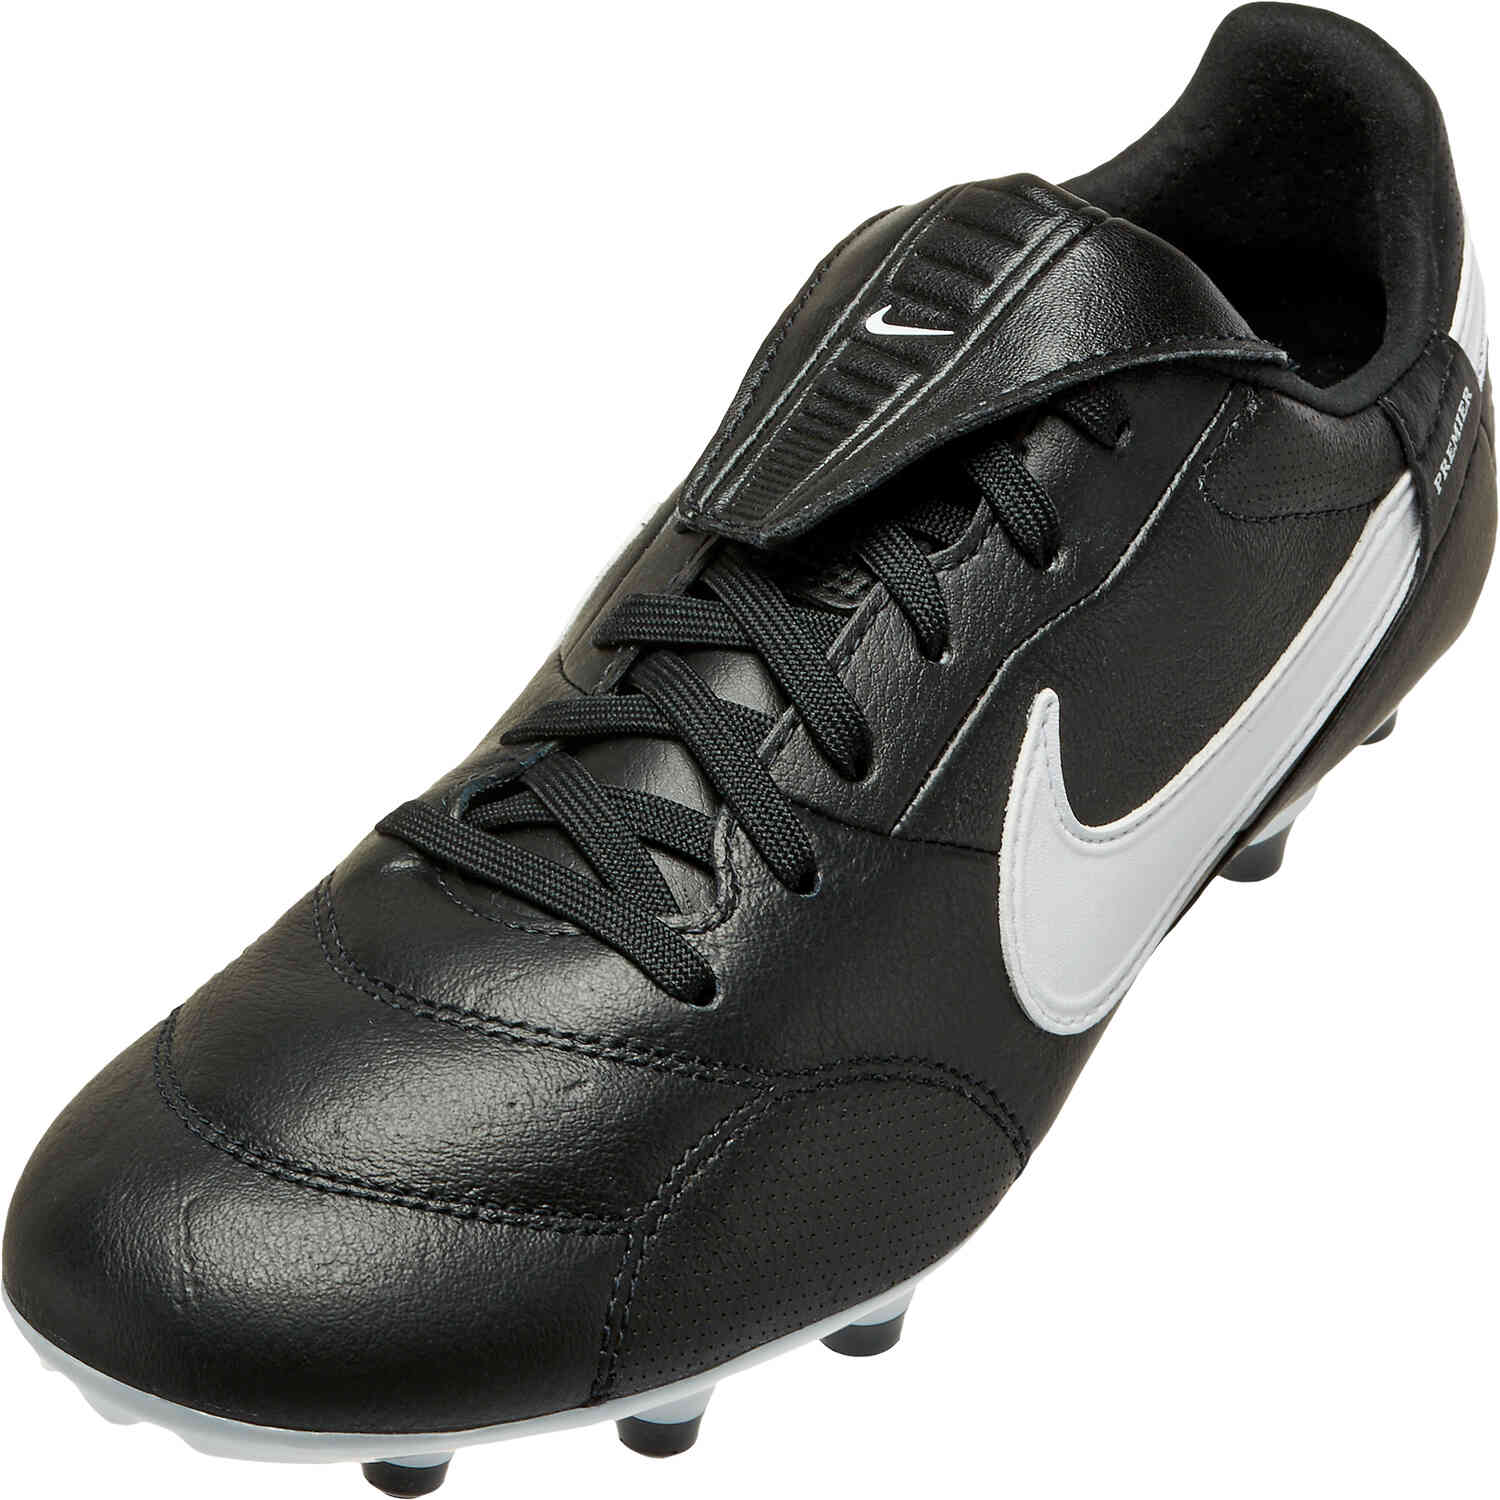 Nike III FG Ground Soccer Cleats - Black & White - Soccer Master